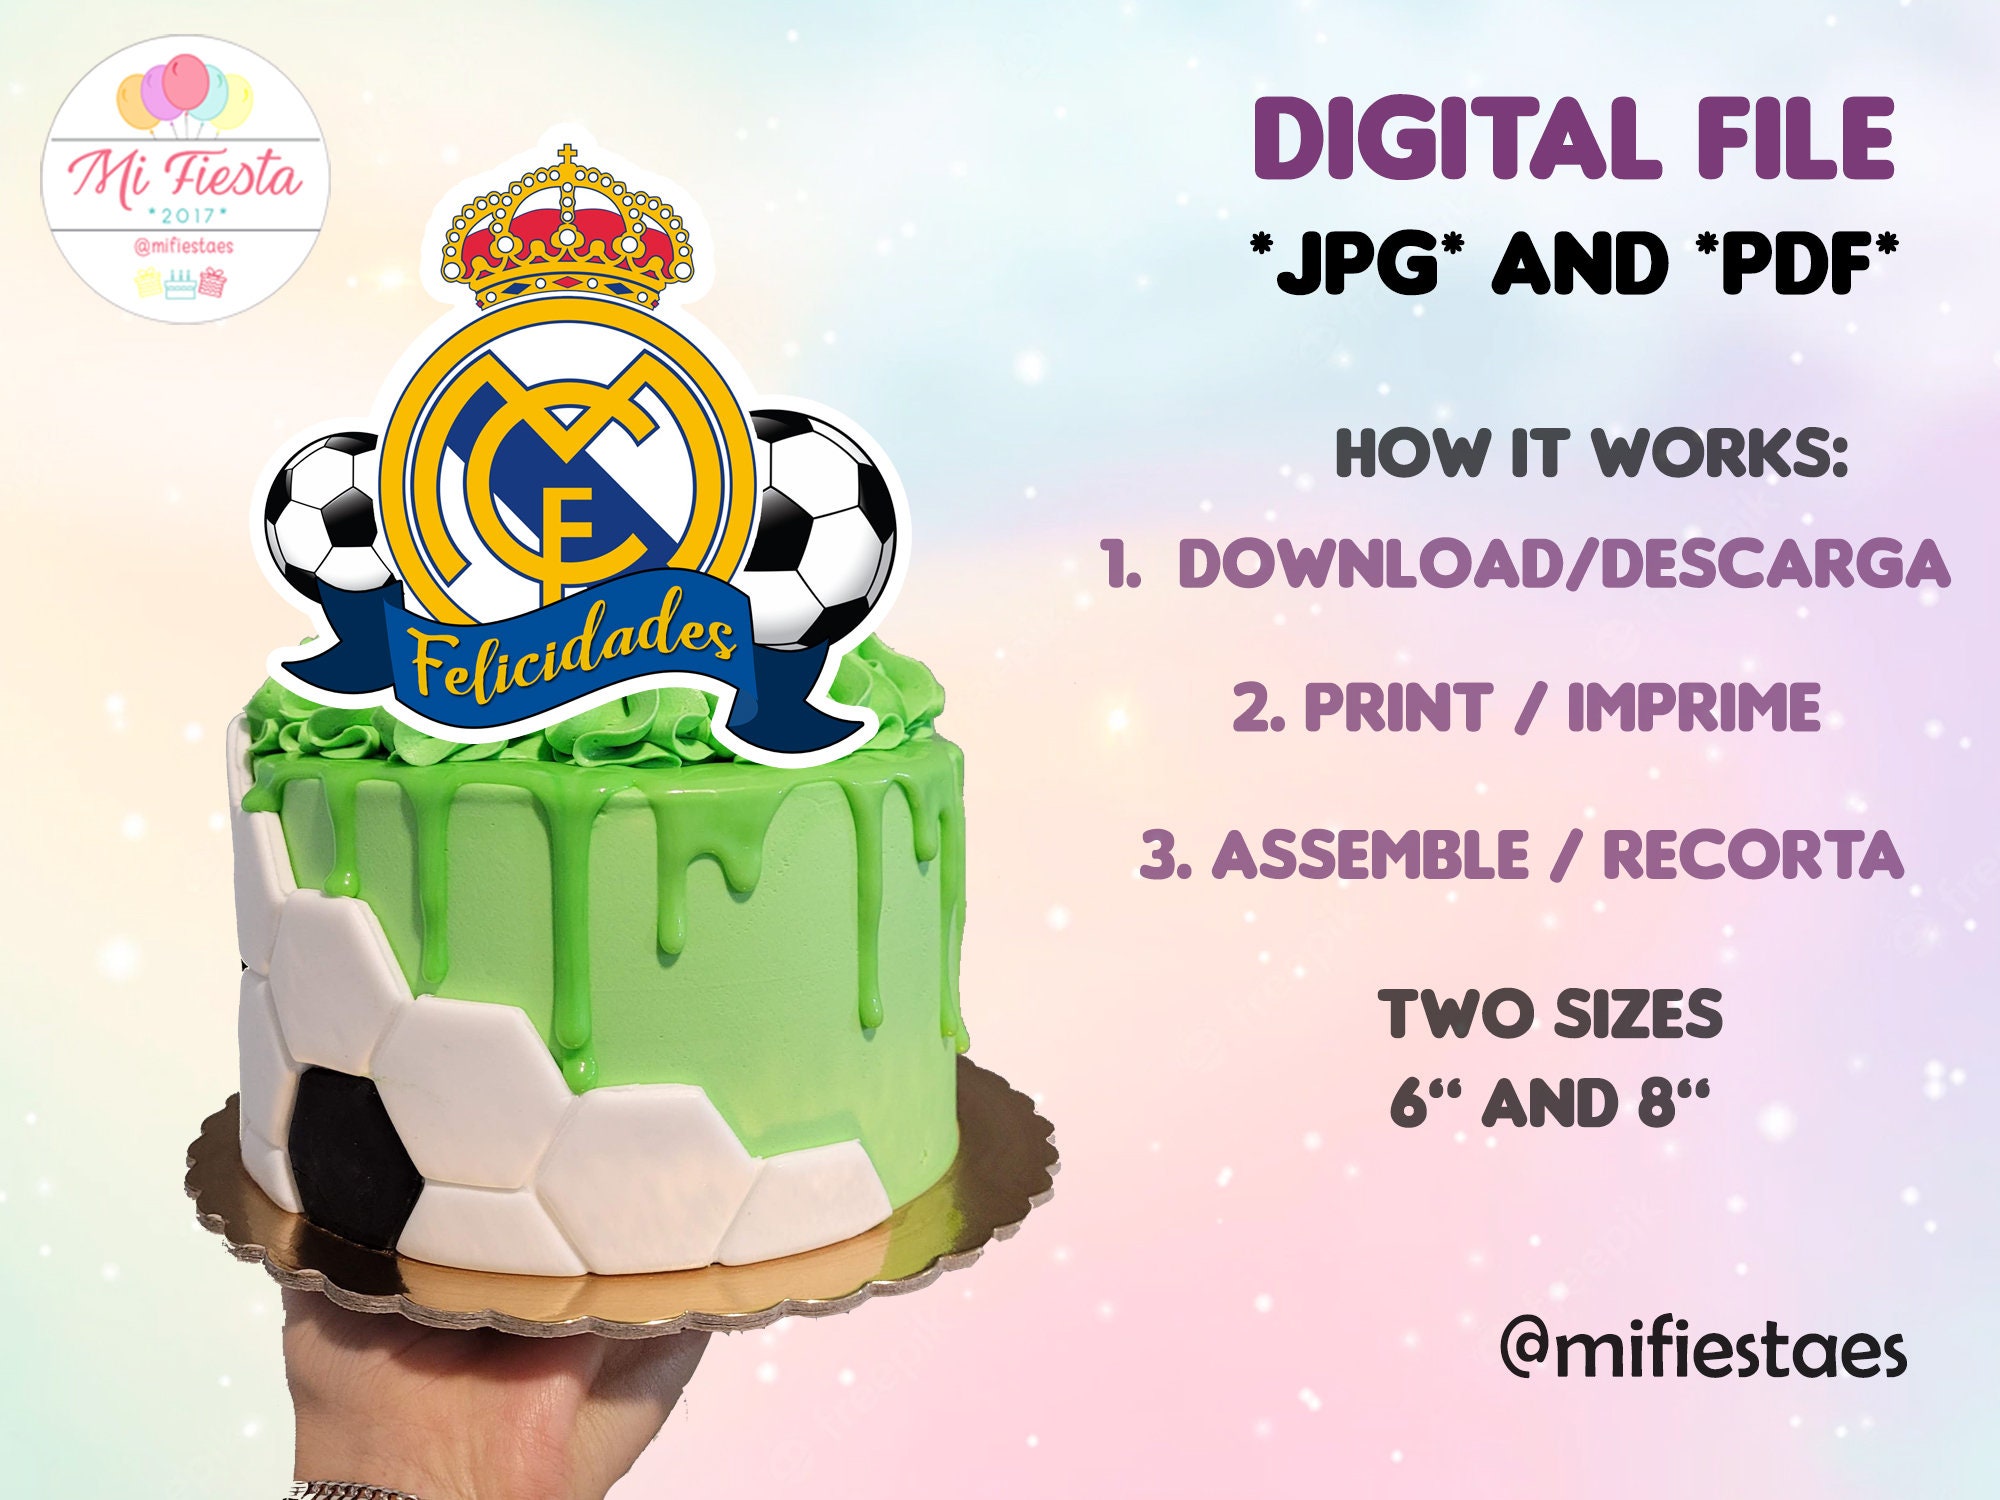 Real Madrid Cake - Picture of Ricci's Cakes, Madrid - Tripadvisor